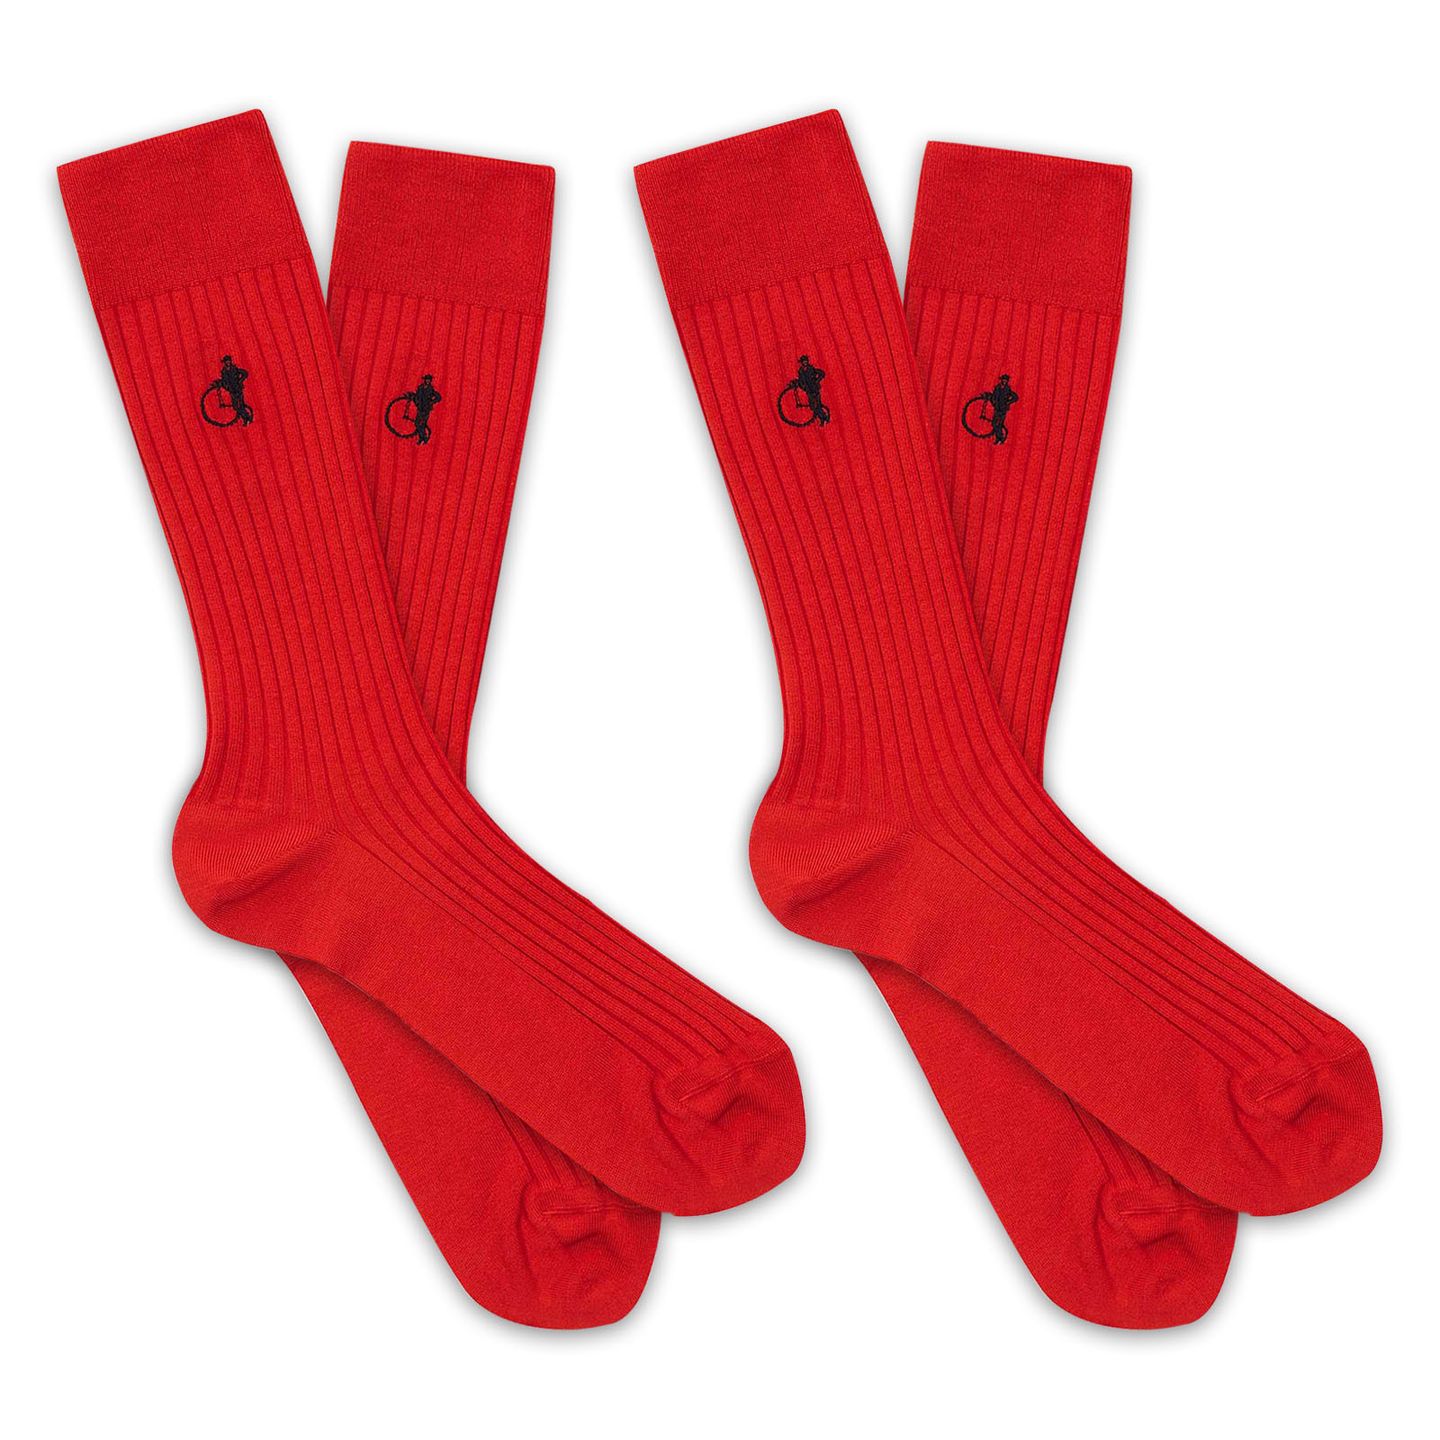 2 pairs of red socks